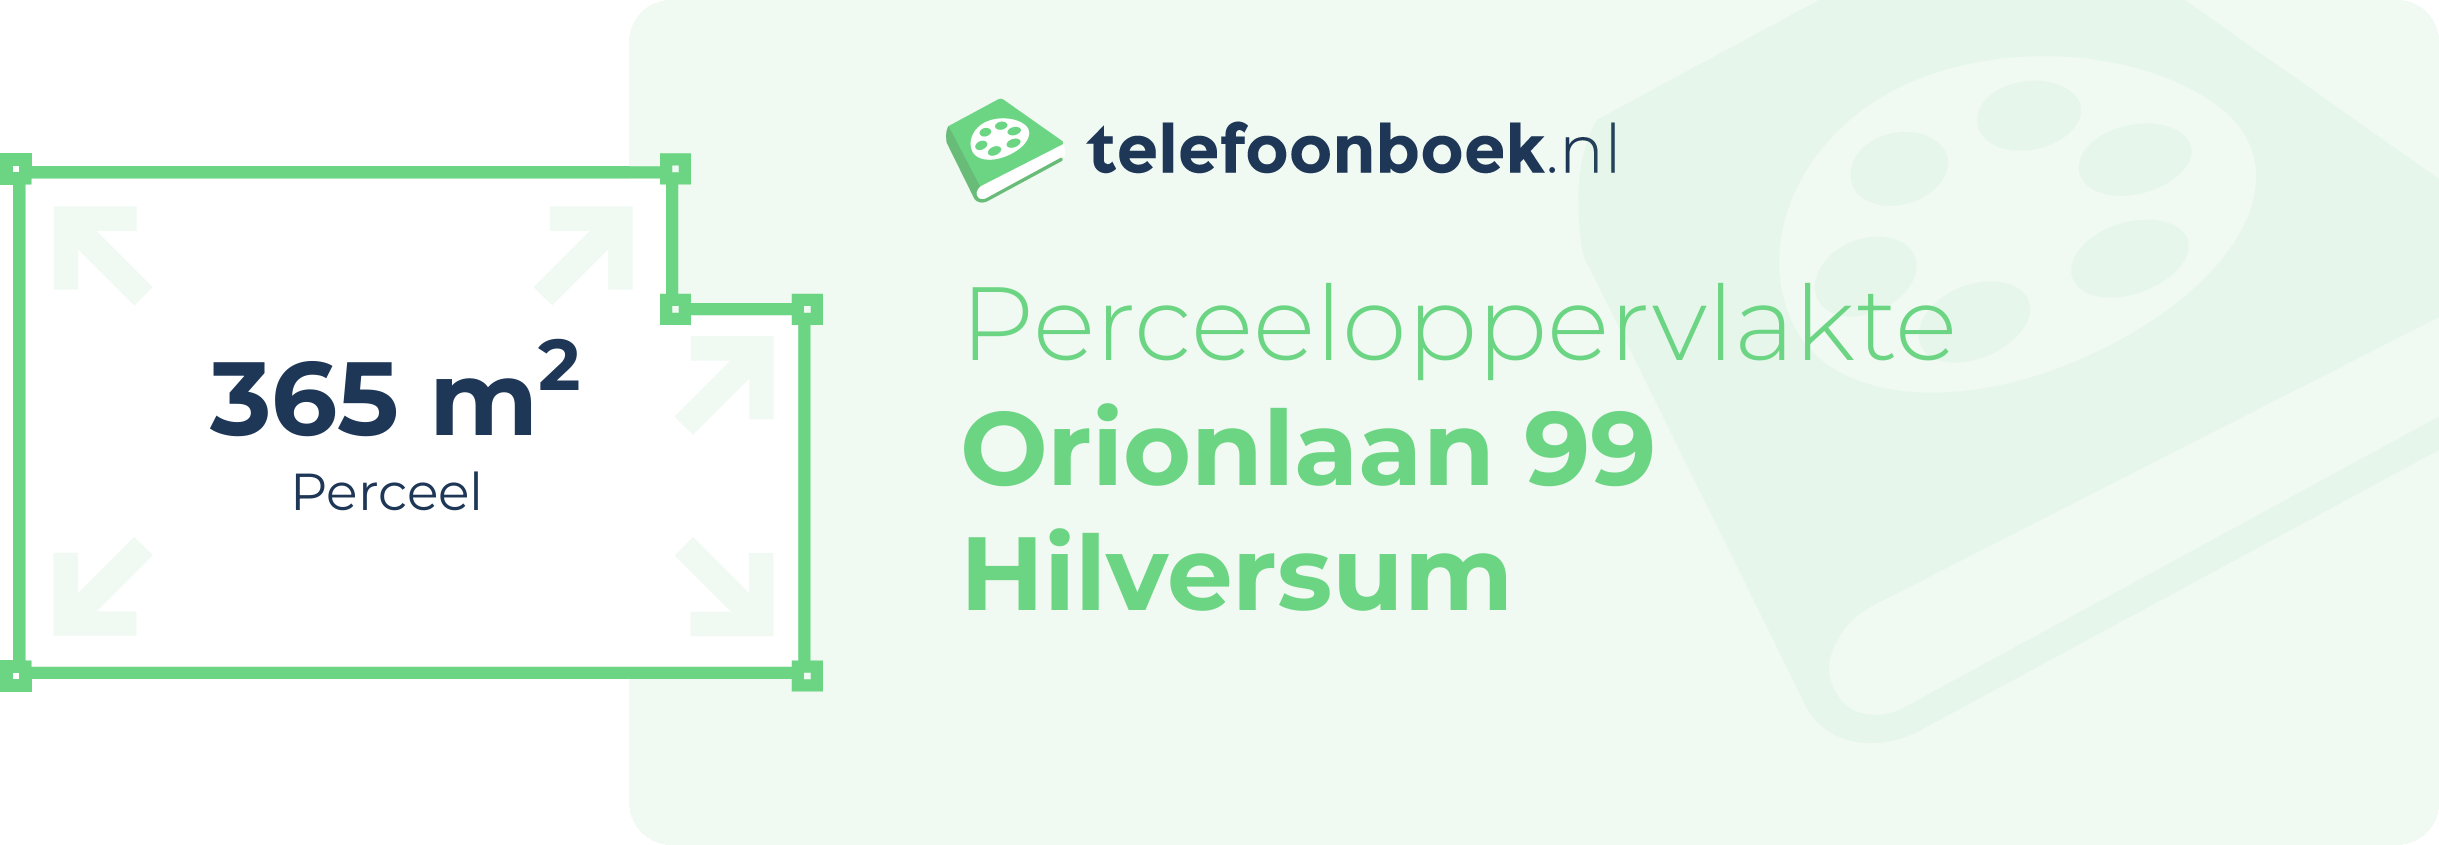 Perceeloppervlakte Orionlaan 99 Hilversum